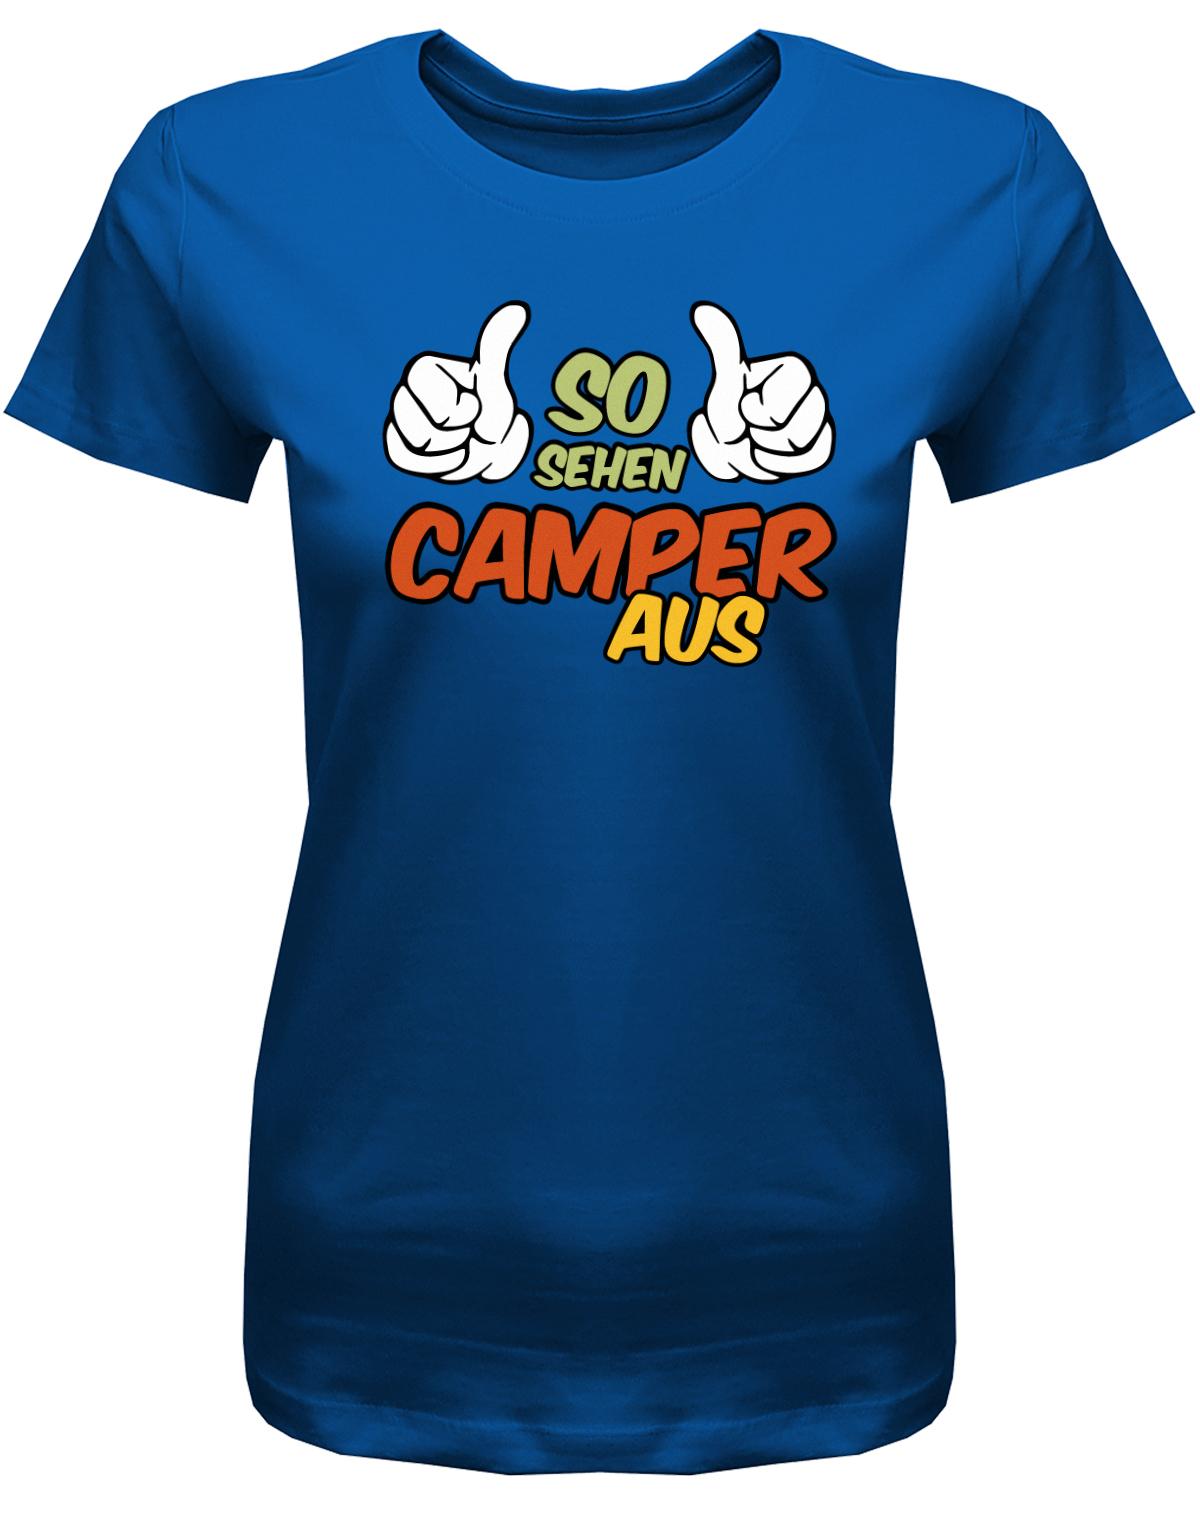 So-sehen-Camper-aus-Damen-Camping-Shirt-royalblaupdX7hwknHTpJ6